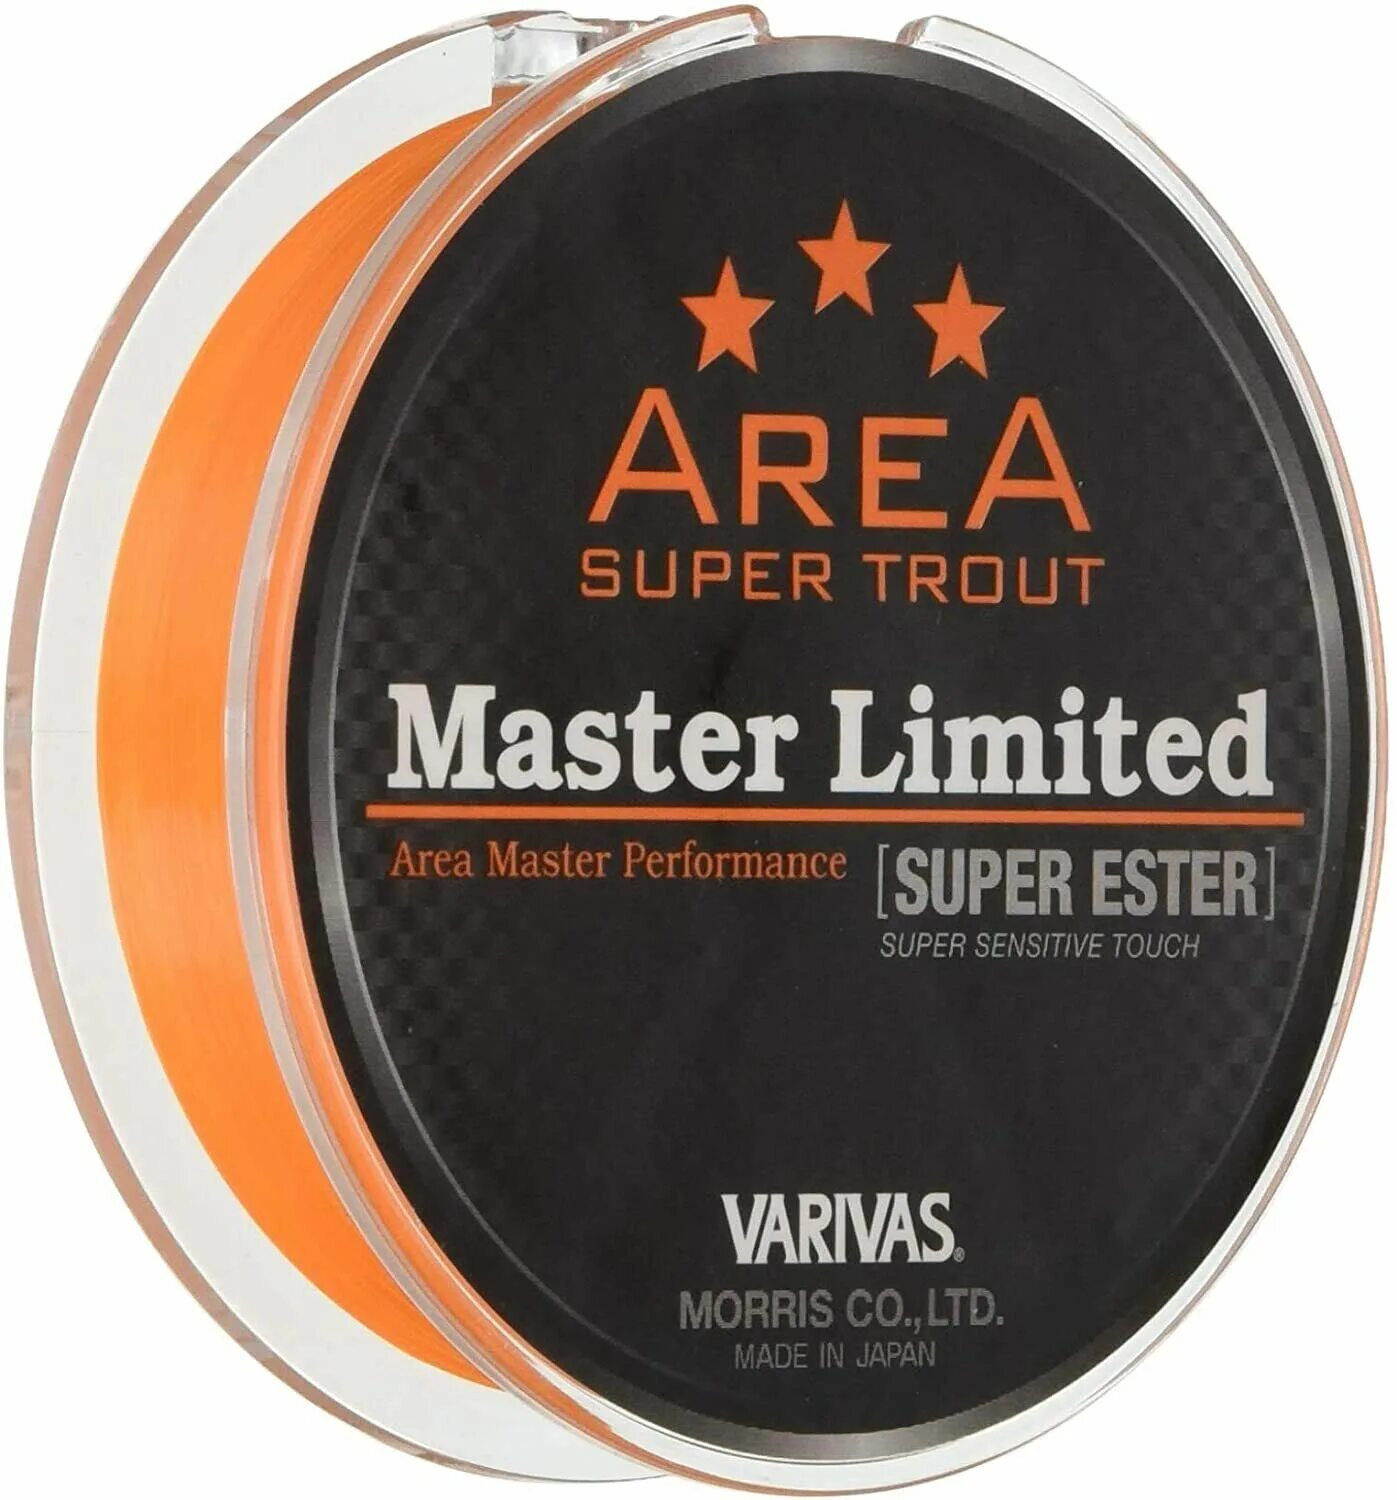 Master limited. Varivas Master Limited super ester 140m онлиспин. Леска varivas area Trout Master Limited super ester. Леска varivas super Trout area Master Limited svg 150м 2,1lb. Varivas super Trout area 1.2.